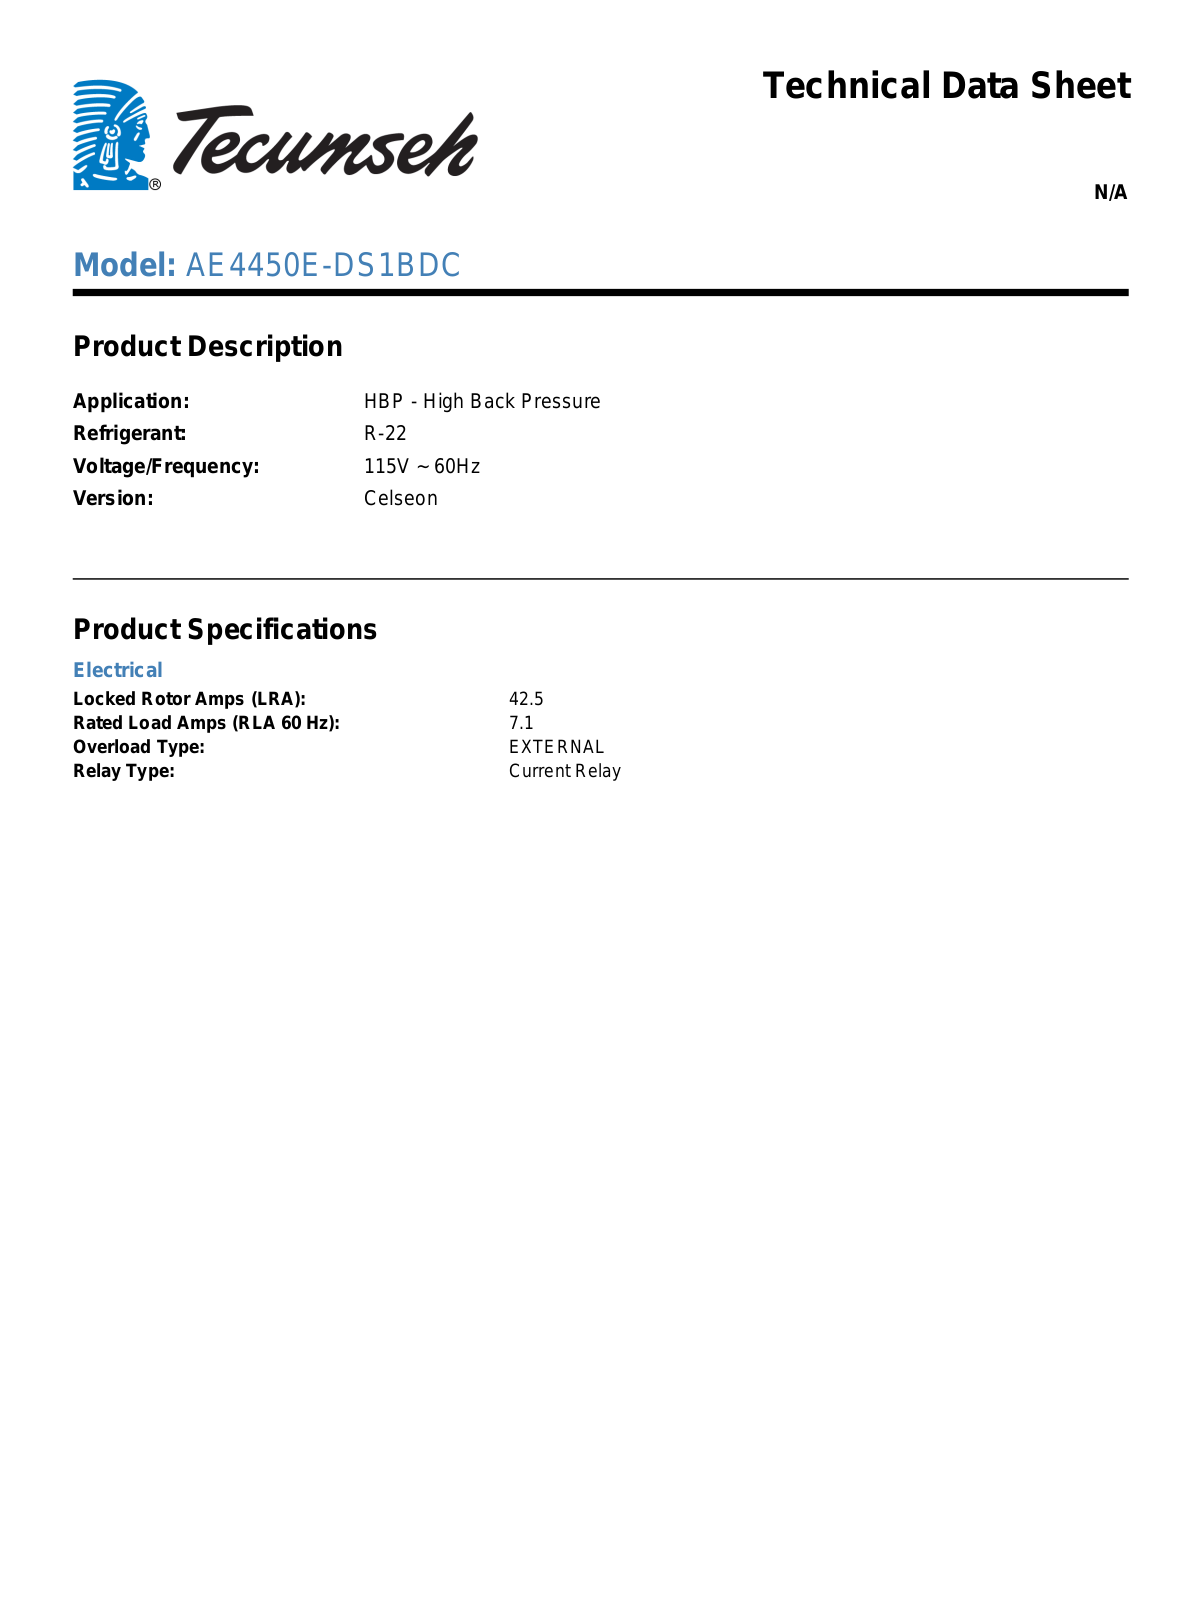 Tecumseh AE4450E-DS1BDC User Manual